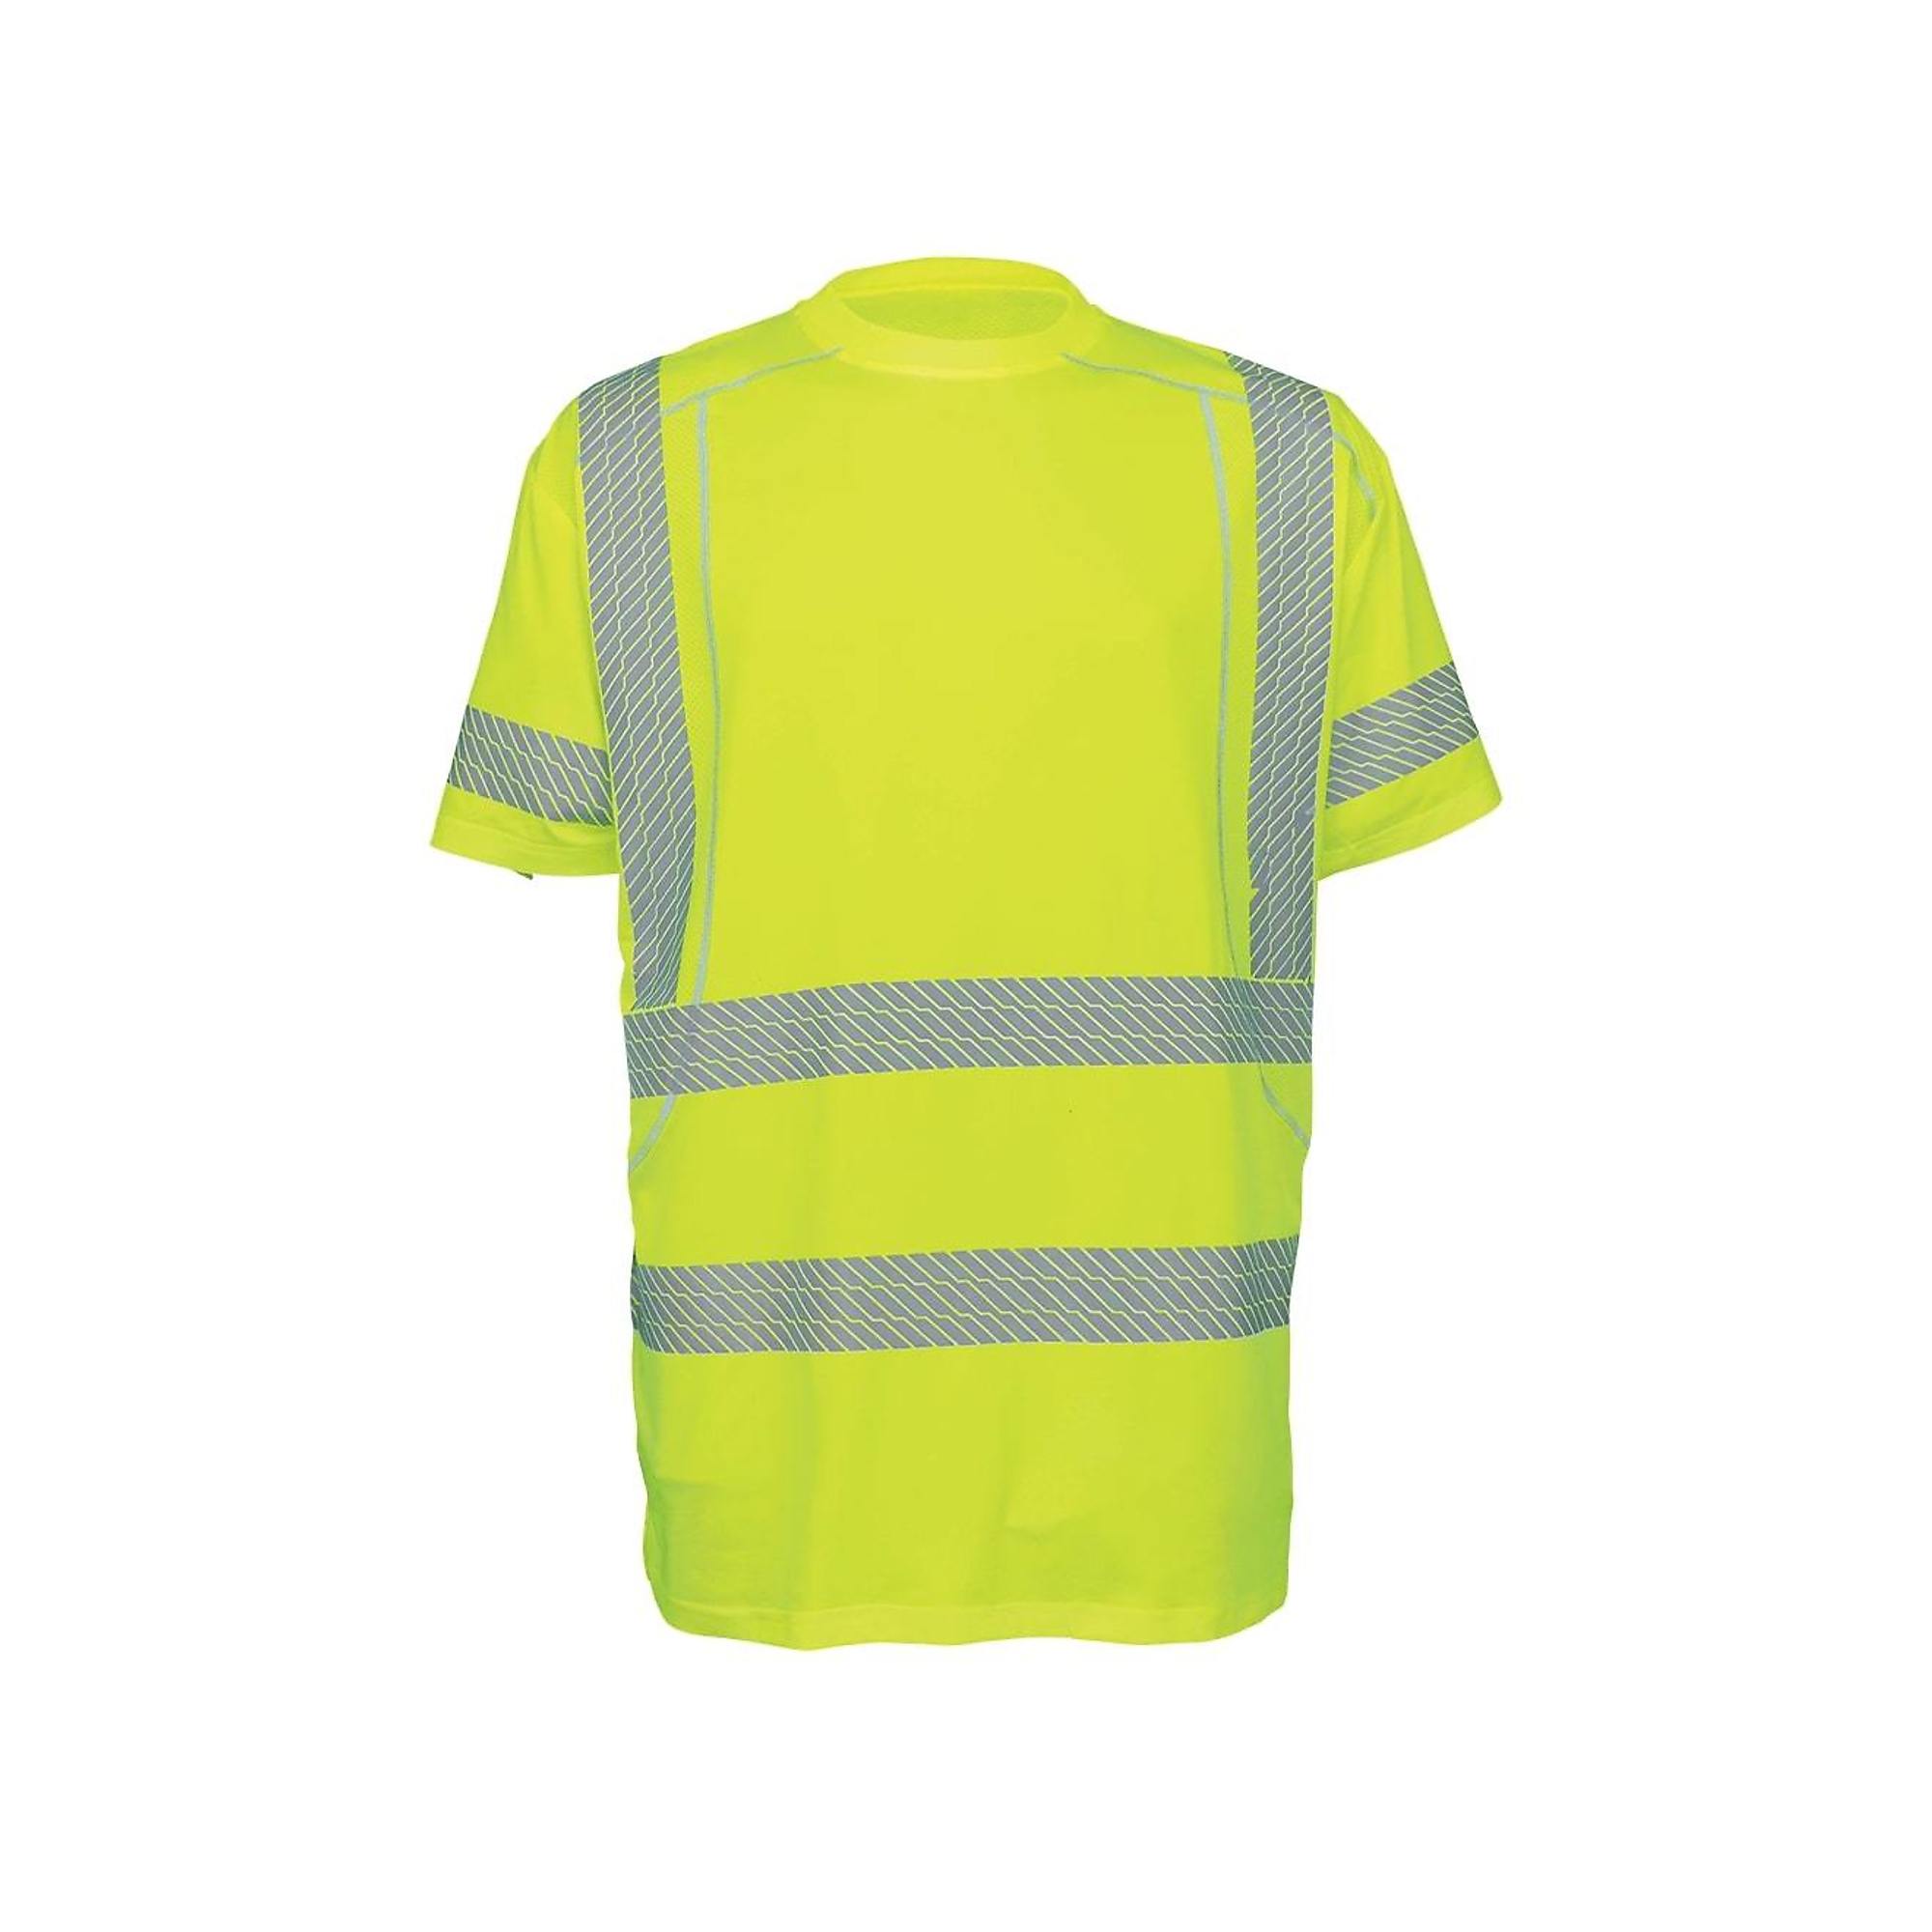 FrogWear, HV Yellow/Green, Class 3 Self-Wicking, Athletic Shirt, Size S, Model GLO-205-S